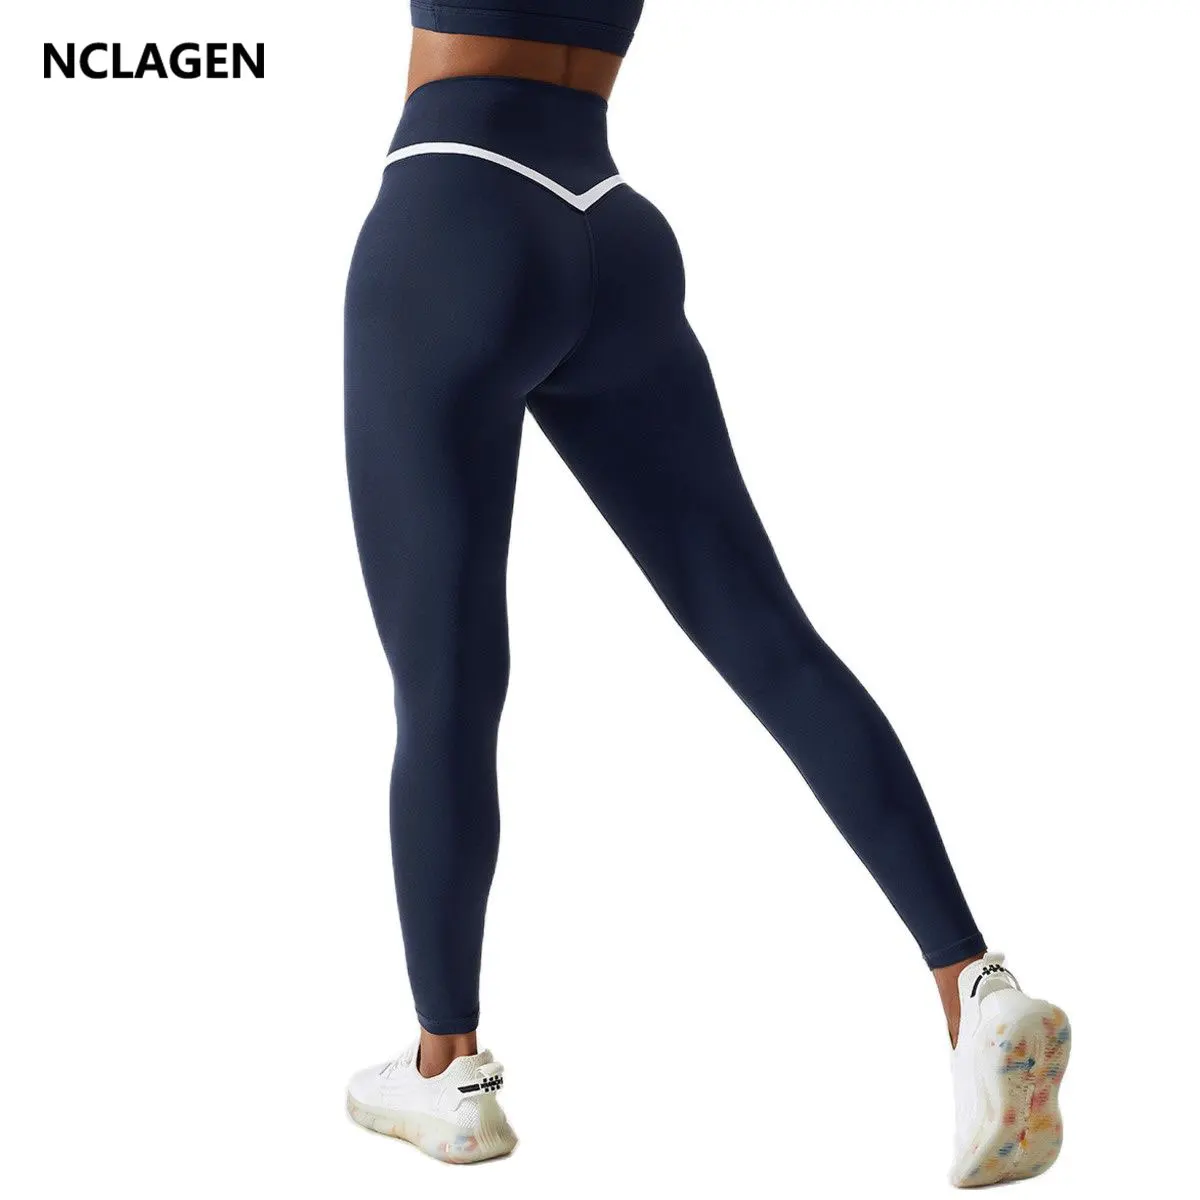 

NCLAGEN Yoga Pants Women's High Waist Hip Lifting Fitness Leggings Running Training Tights Gym Clothing High Elastic Workout